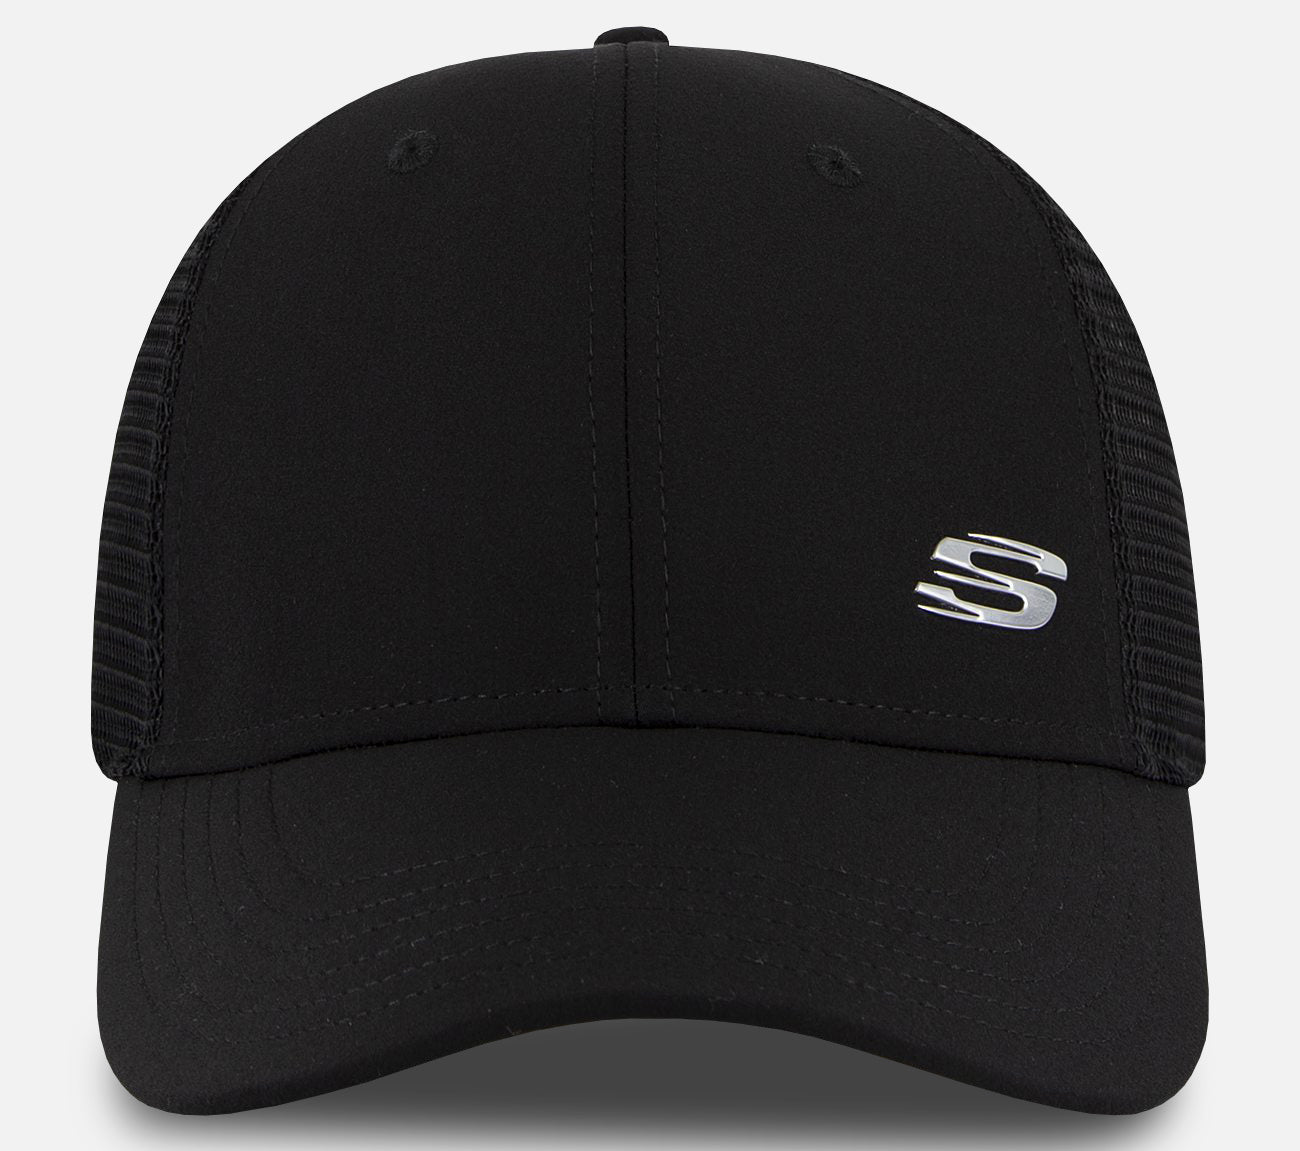 Cap - Sport Metal TPU hat